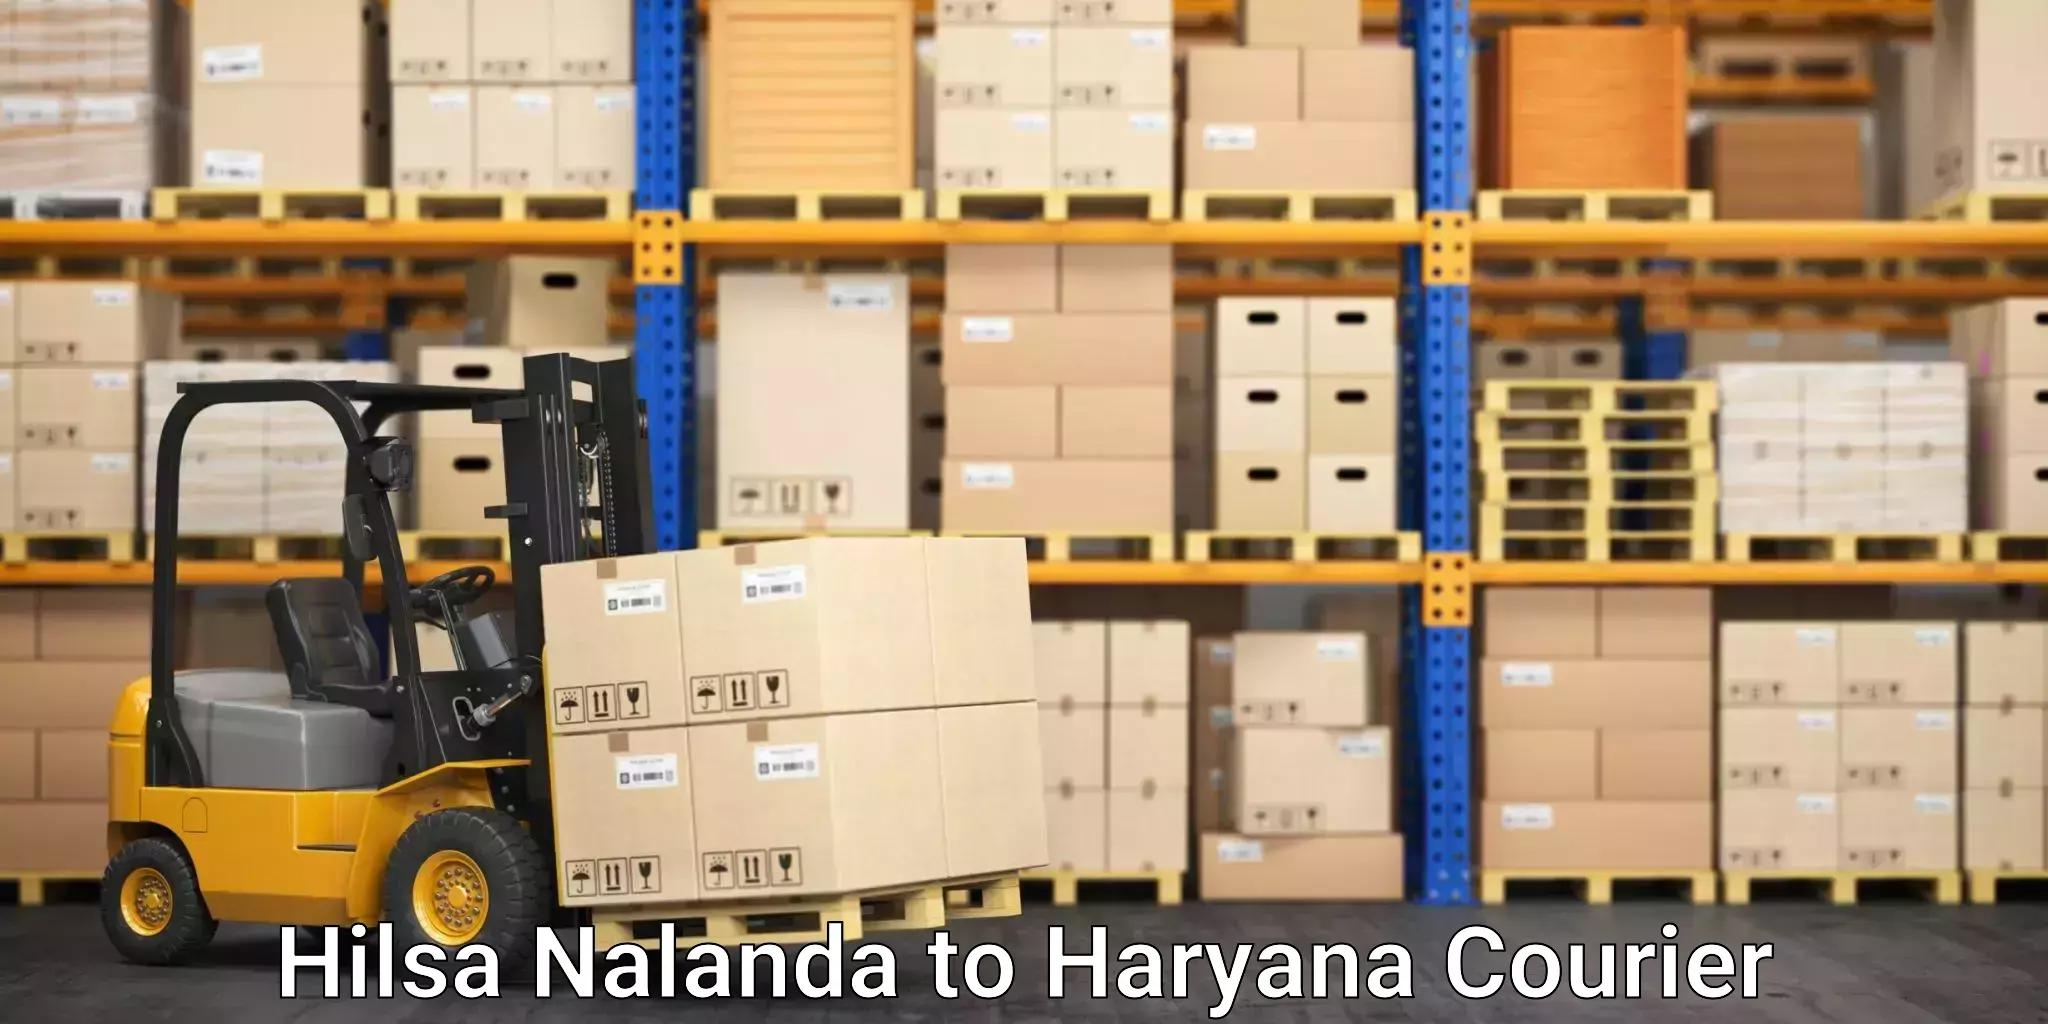 Professional movers in Hilsa Nalanda to Odhan